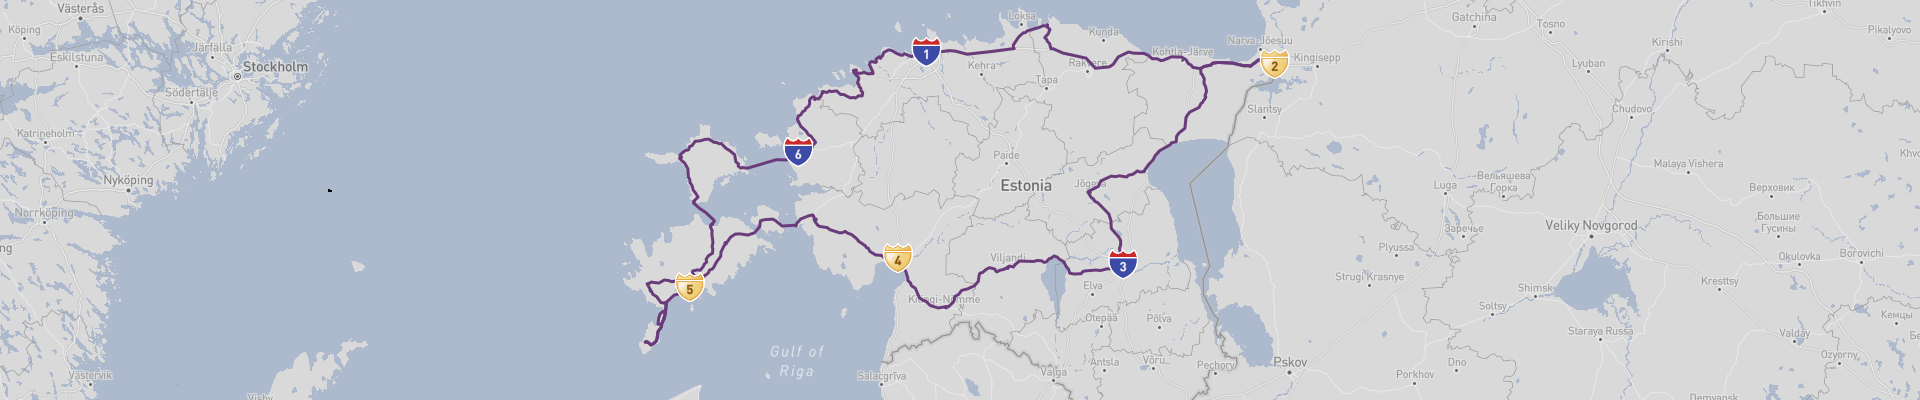 Estonia Road Trip